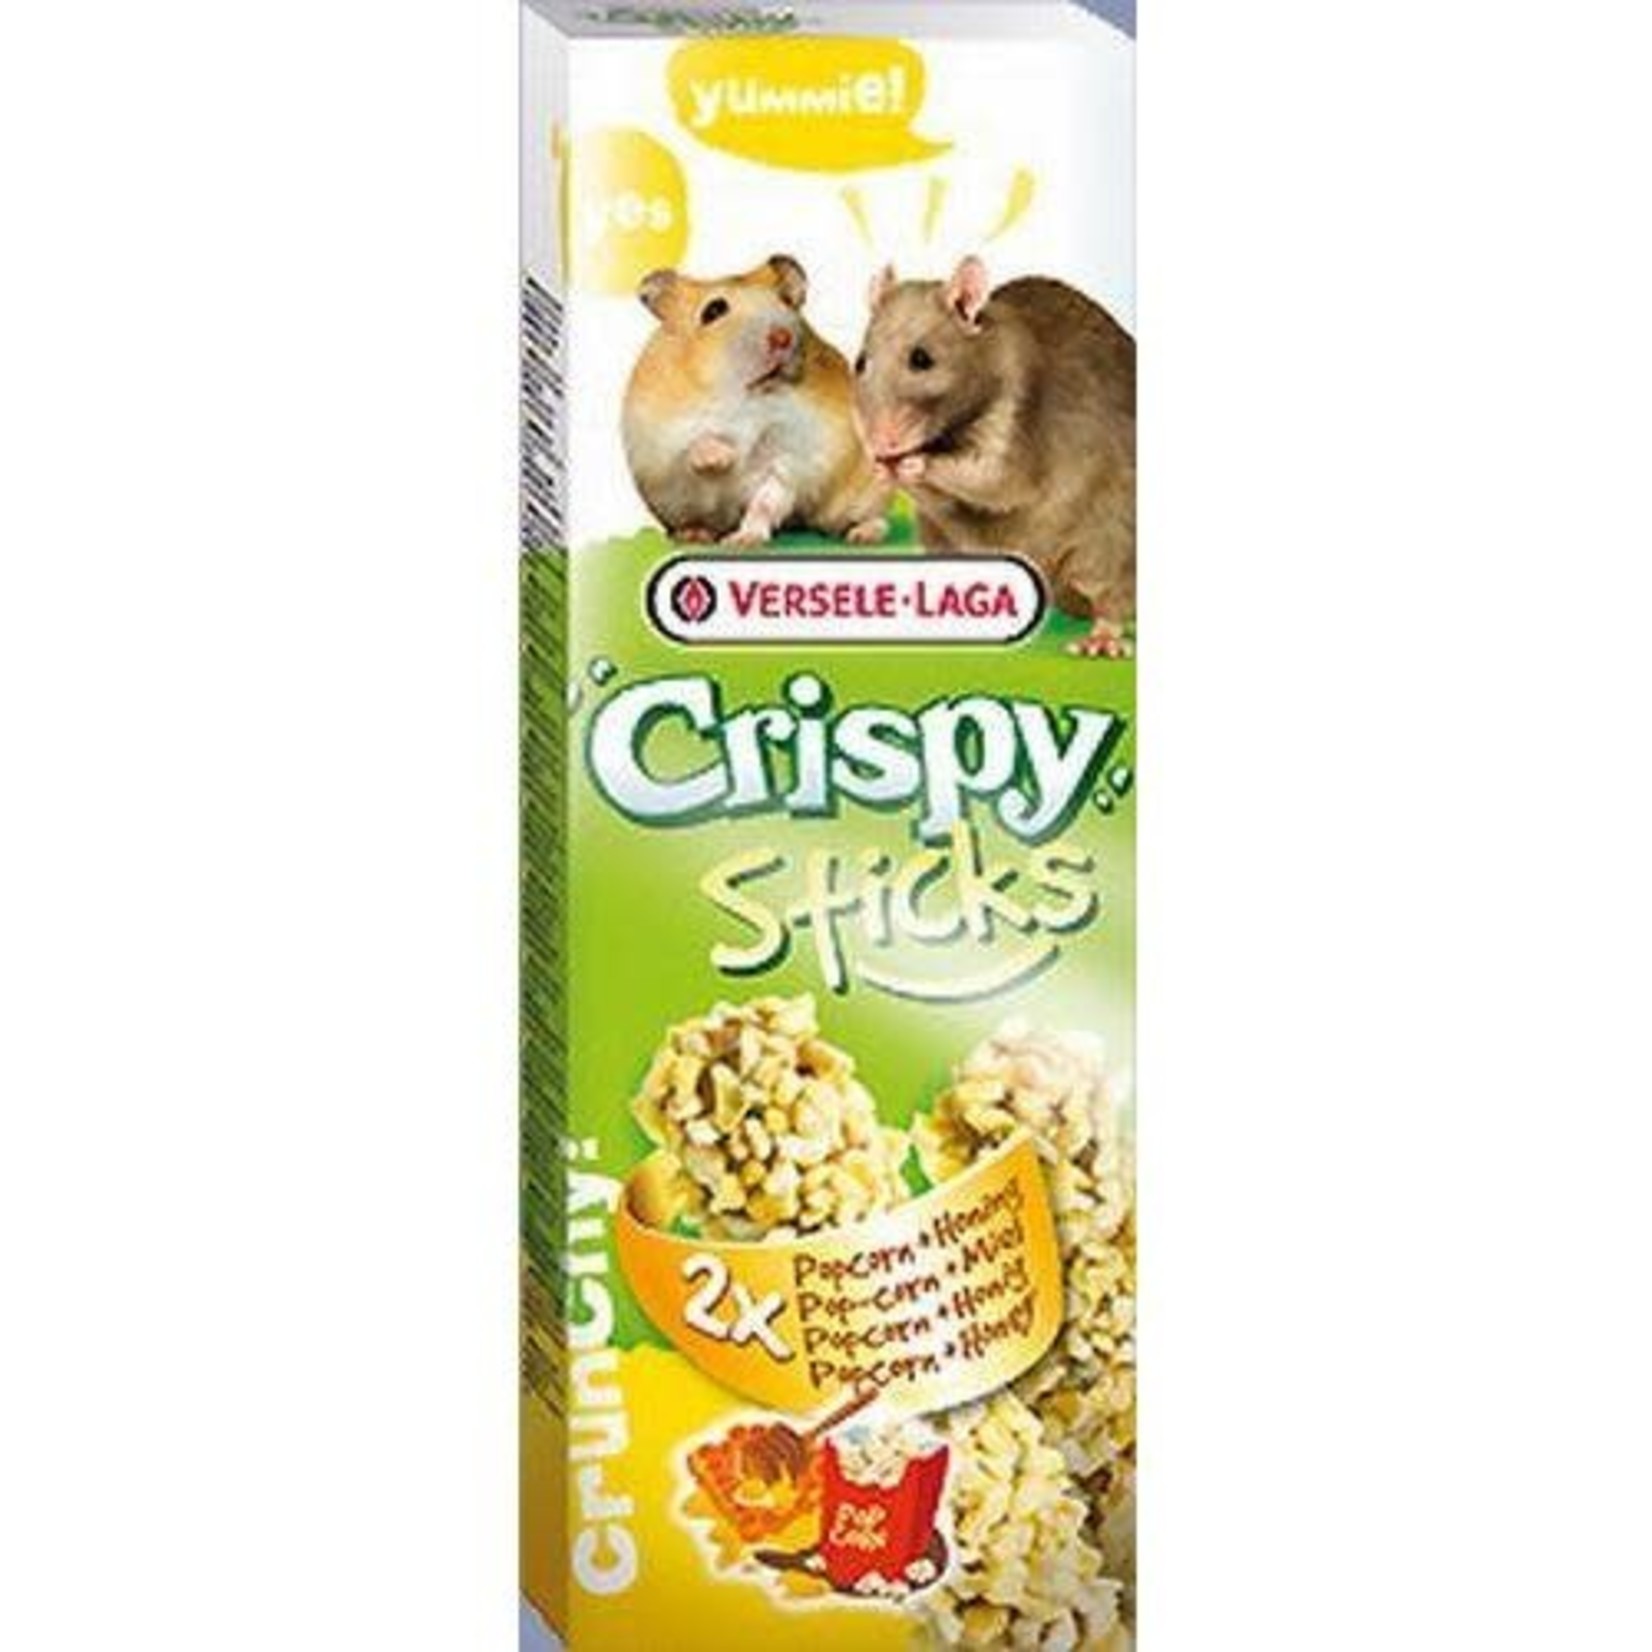 Versele-Laga Crispy Sticks Popcorn&Honey 2x55g